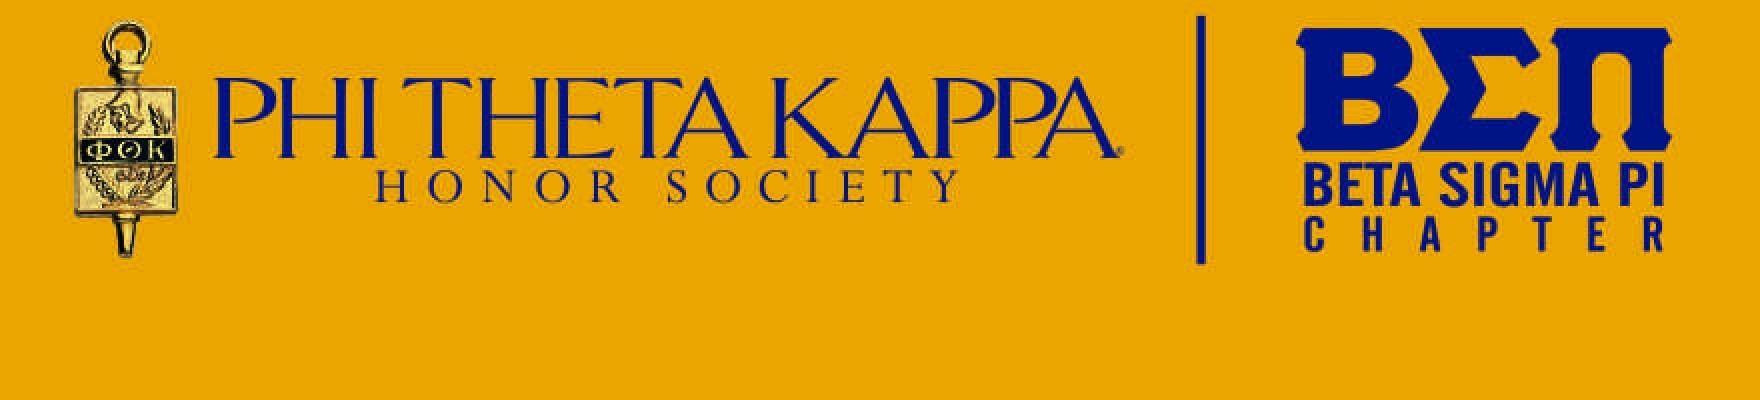 Phi Theta Kappa and Beta Sigma Pi Chapter logos on gold background